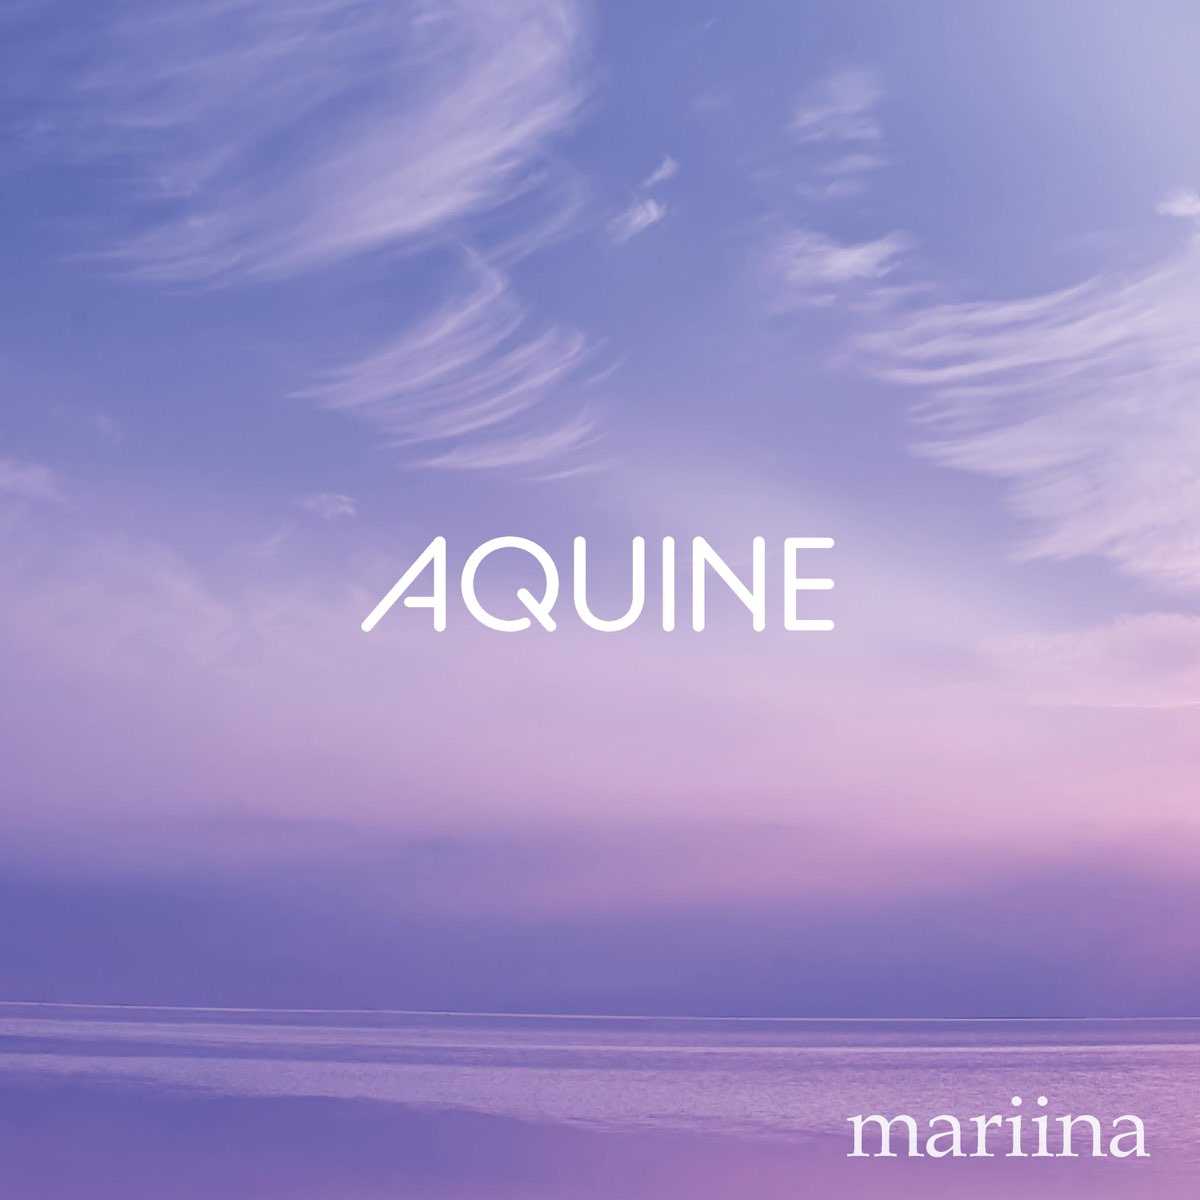 Mariina - EP by AQUINE on Apple Music